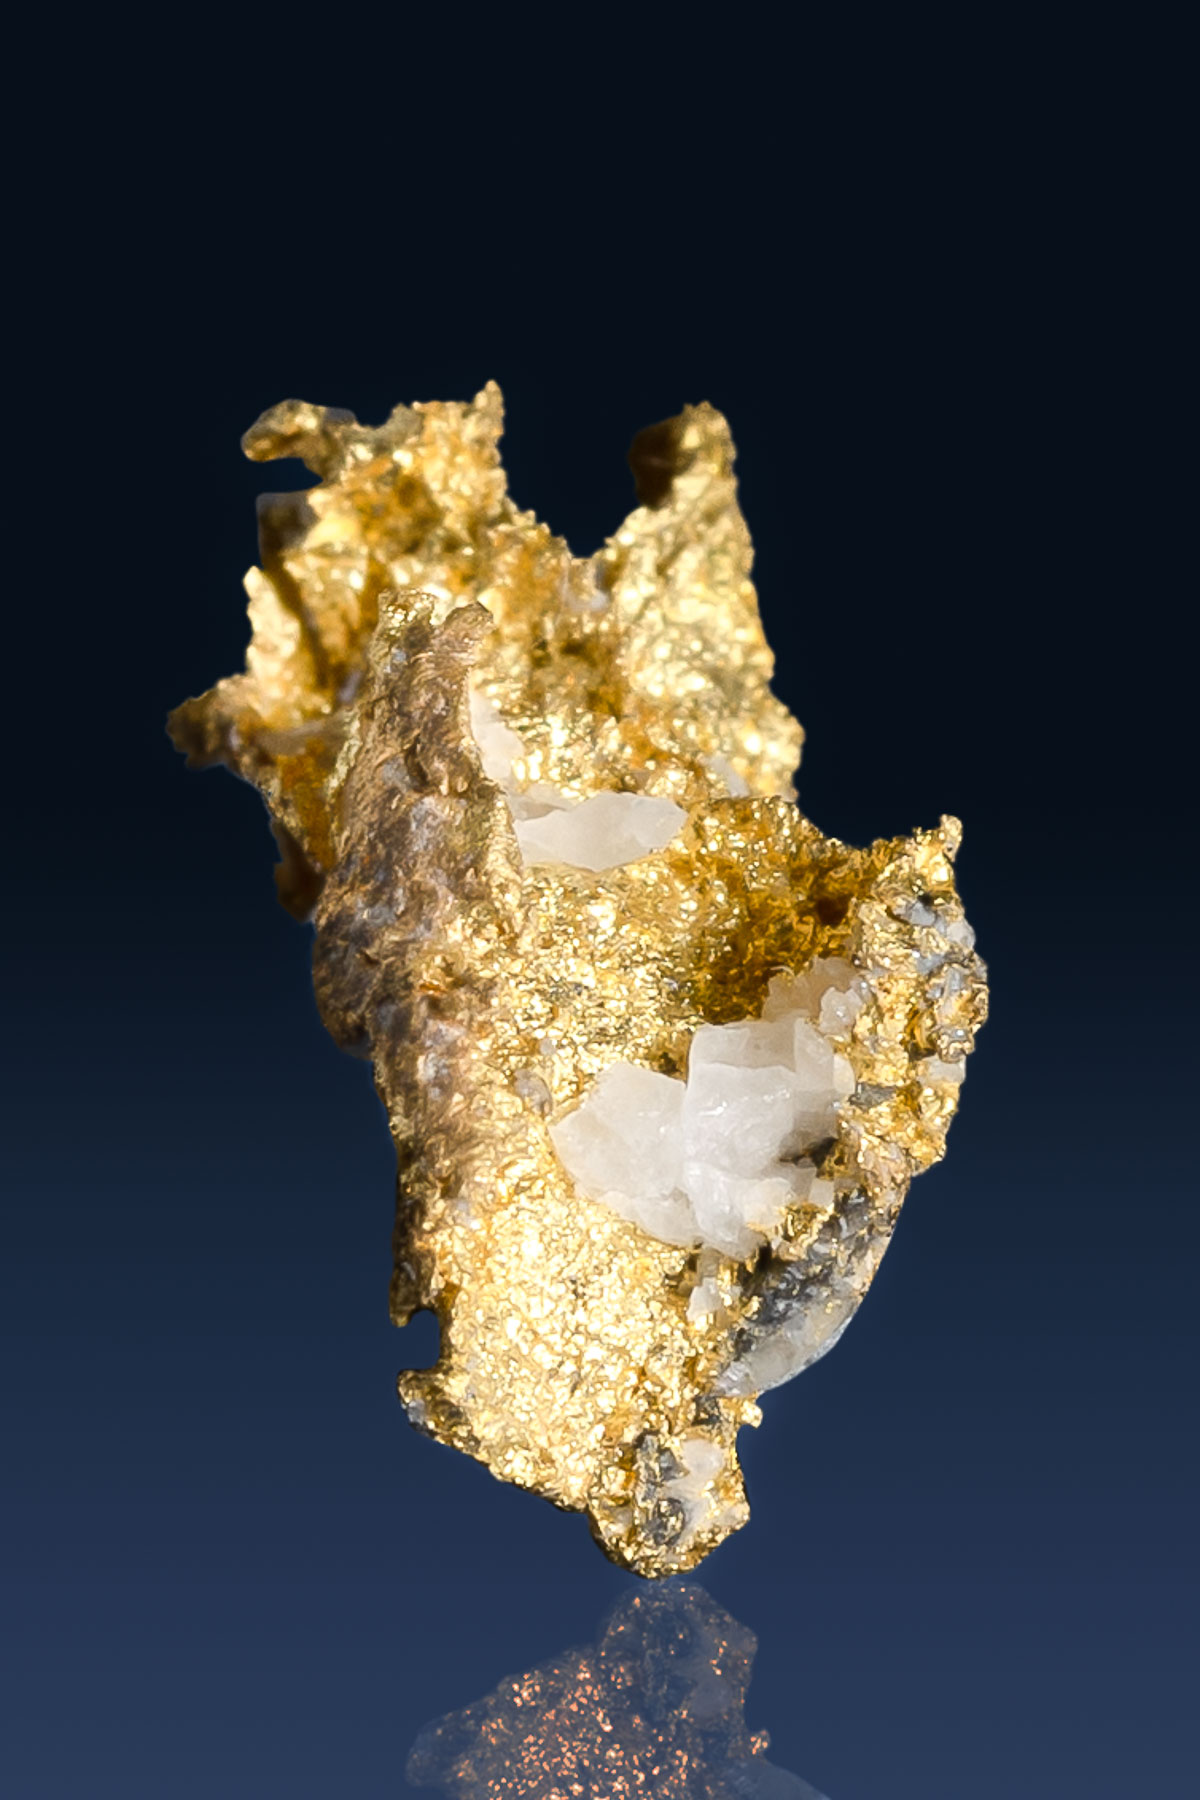 Quartz Nests in California Natural Gold Nugget - 1.31 grams